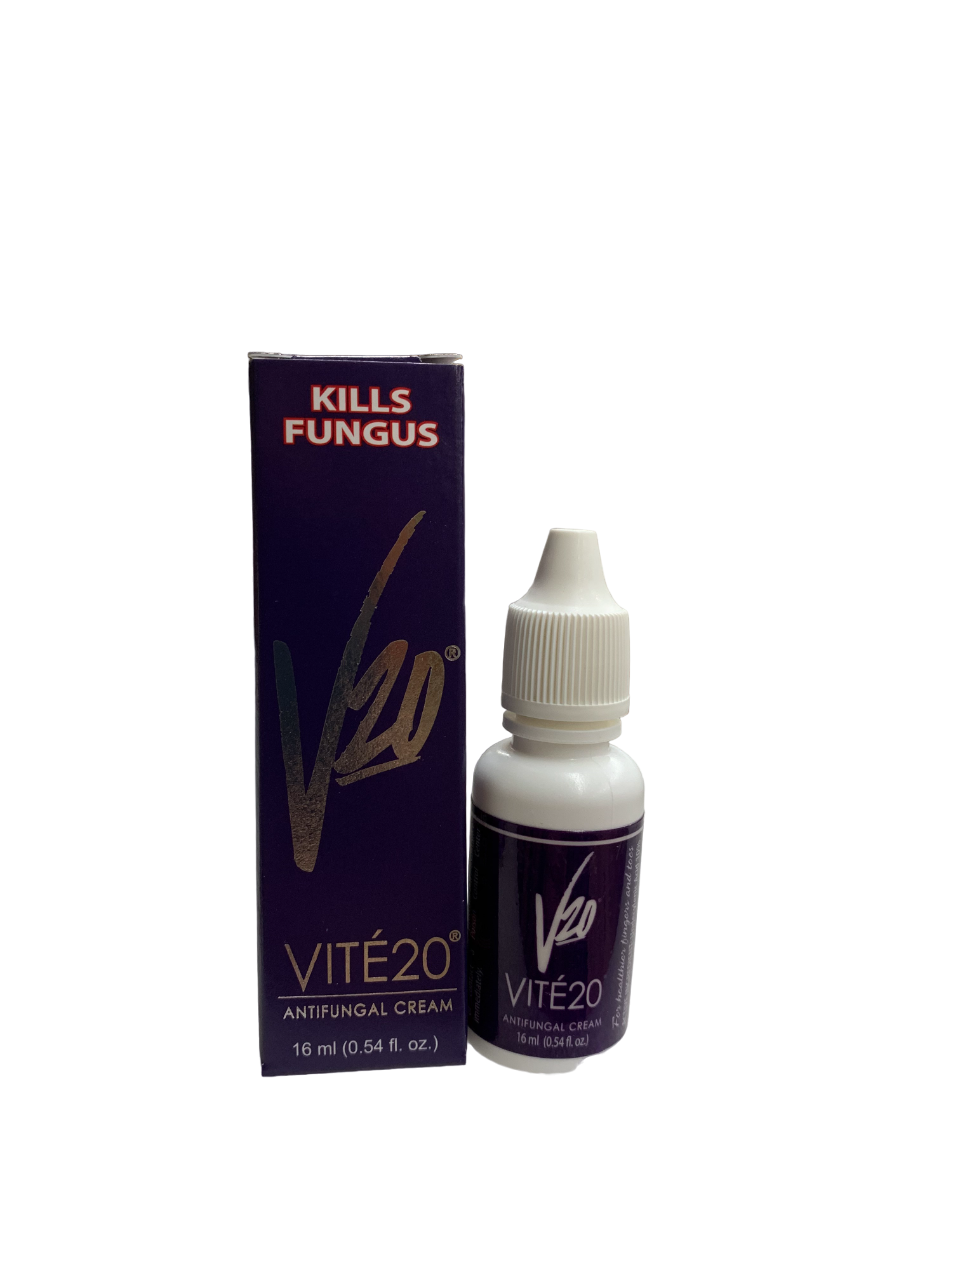 Vite20 Kills Fungus Antifungal Cream